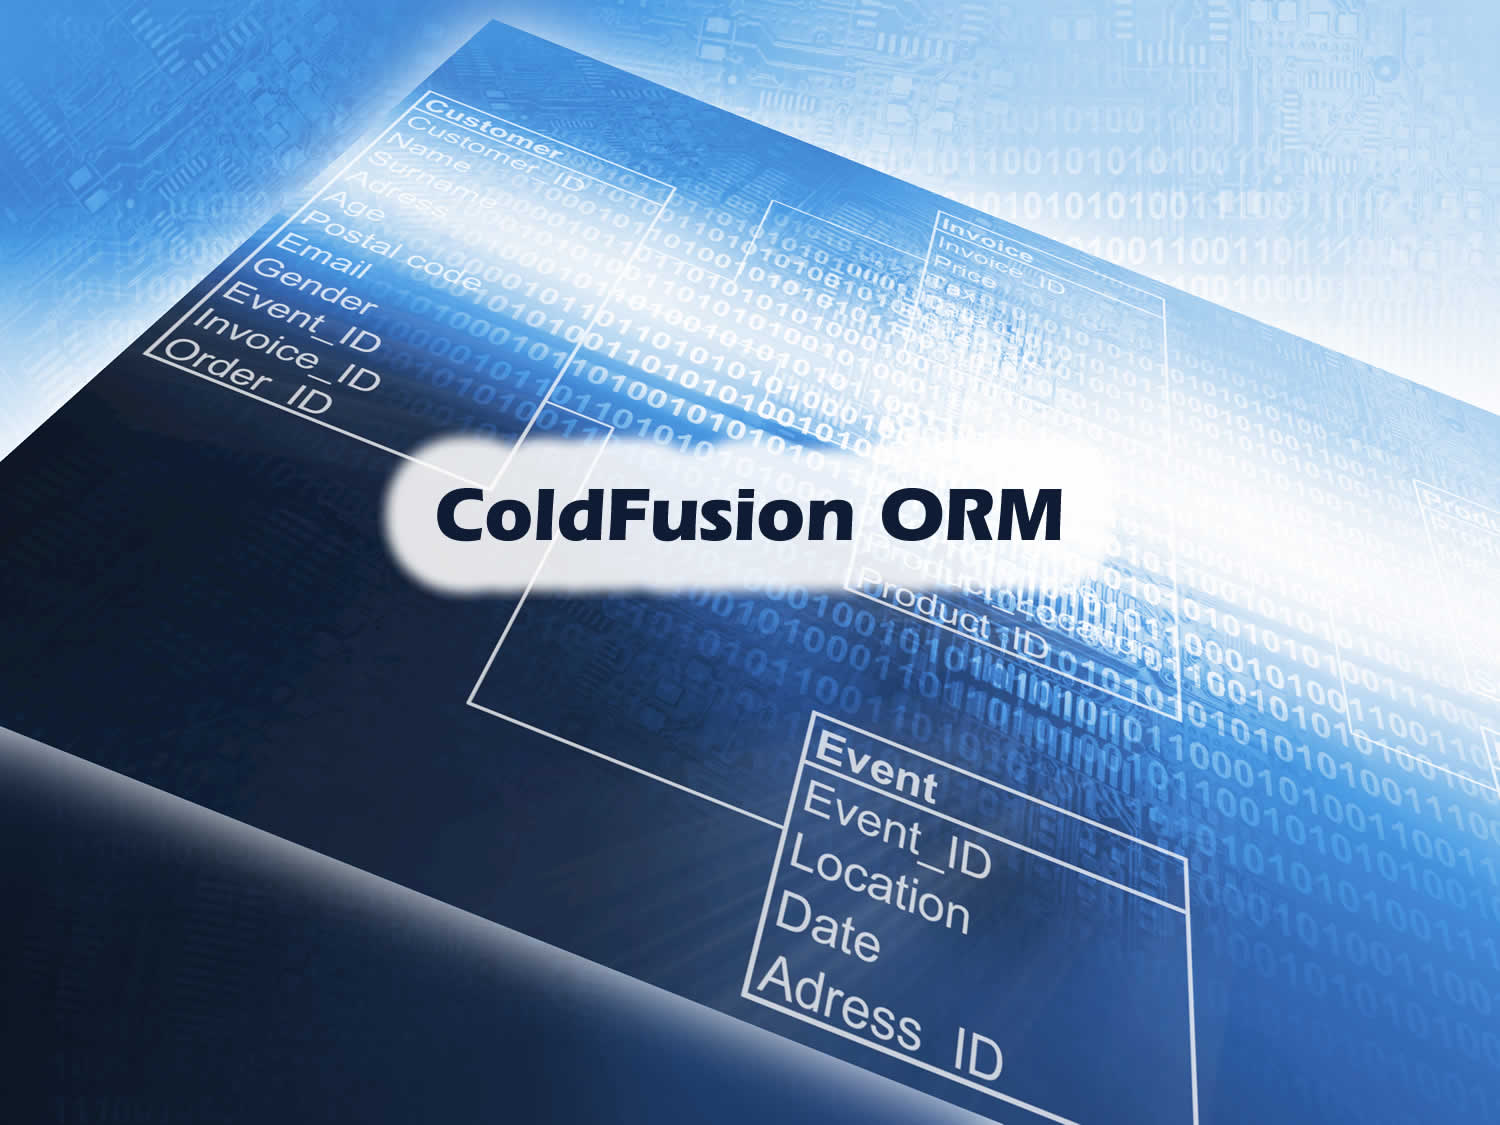 ColdFusion ORM Error - java.lang.Integer, etc.